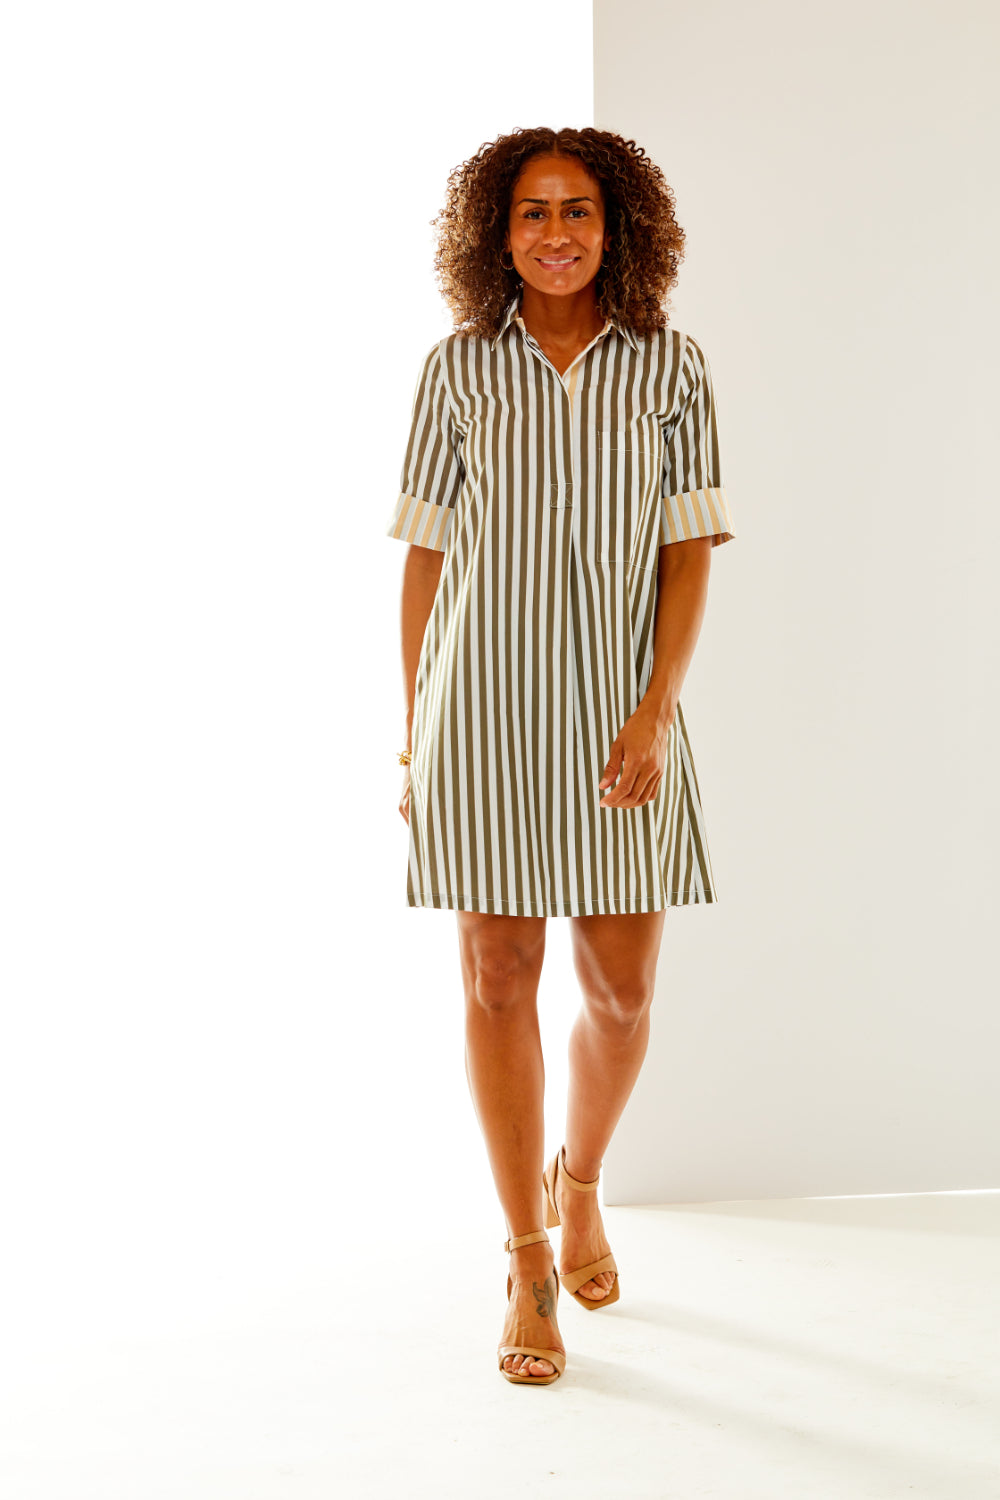 Olive/sand striped shirtdress